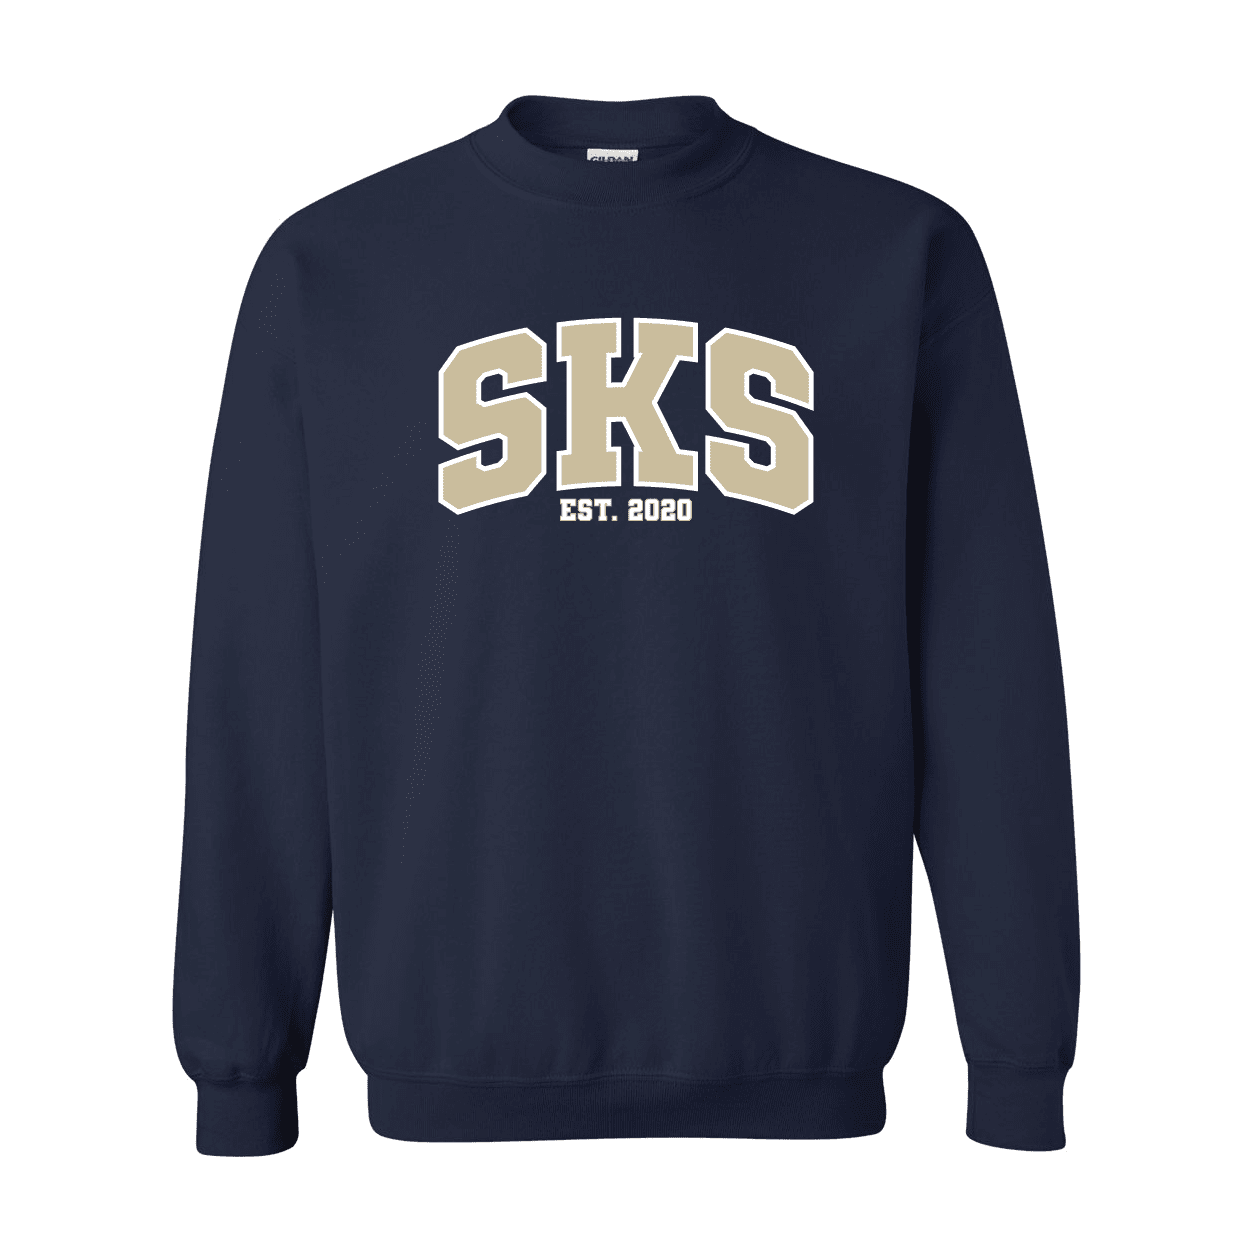 SKS Varsity Crewneck Sweater Sibylla Kiddle School gear wear apparel